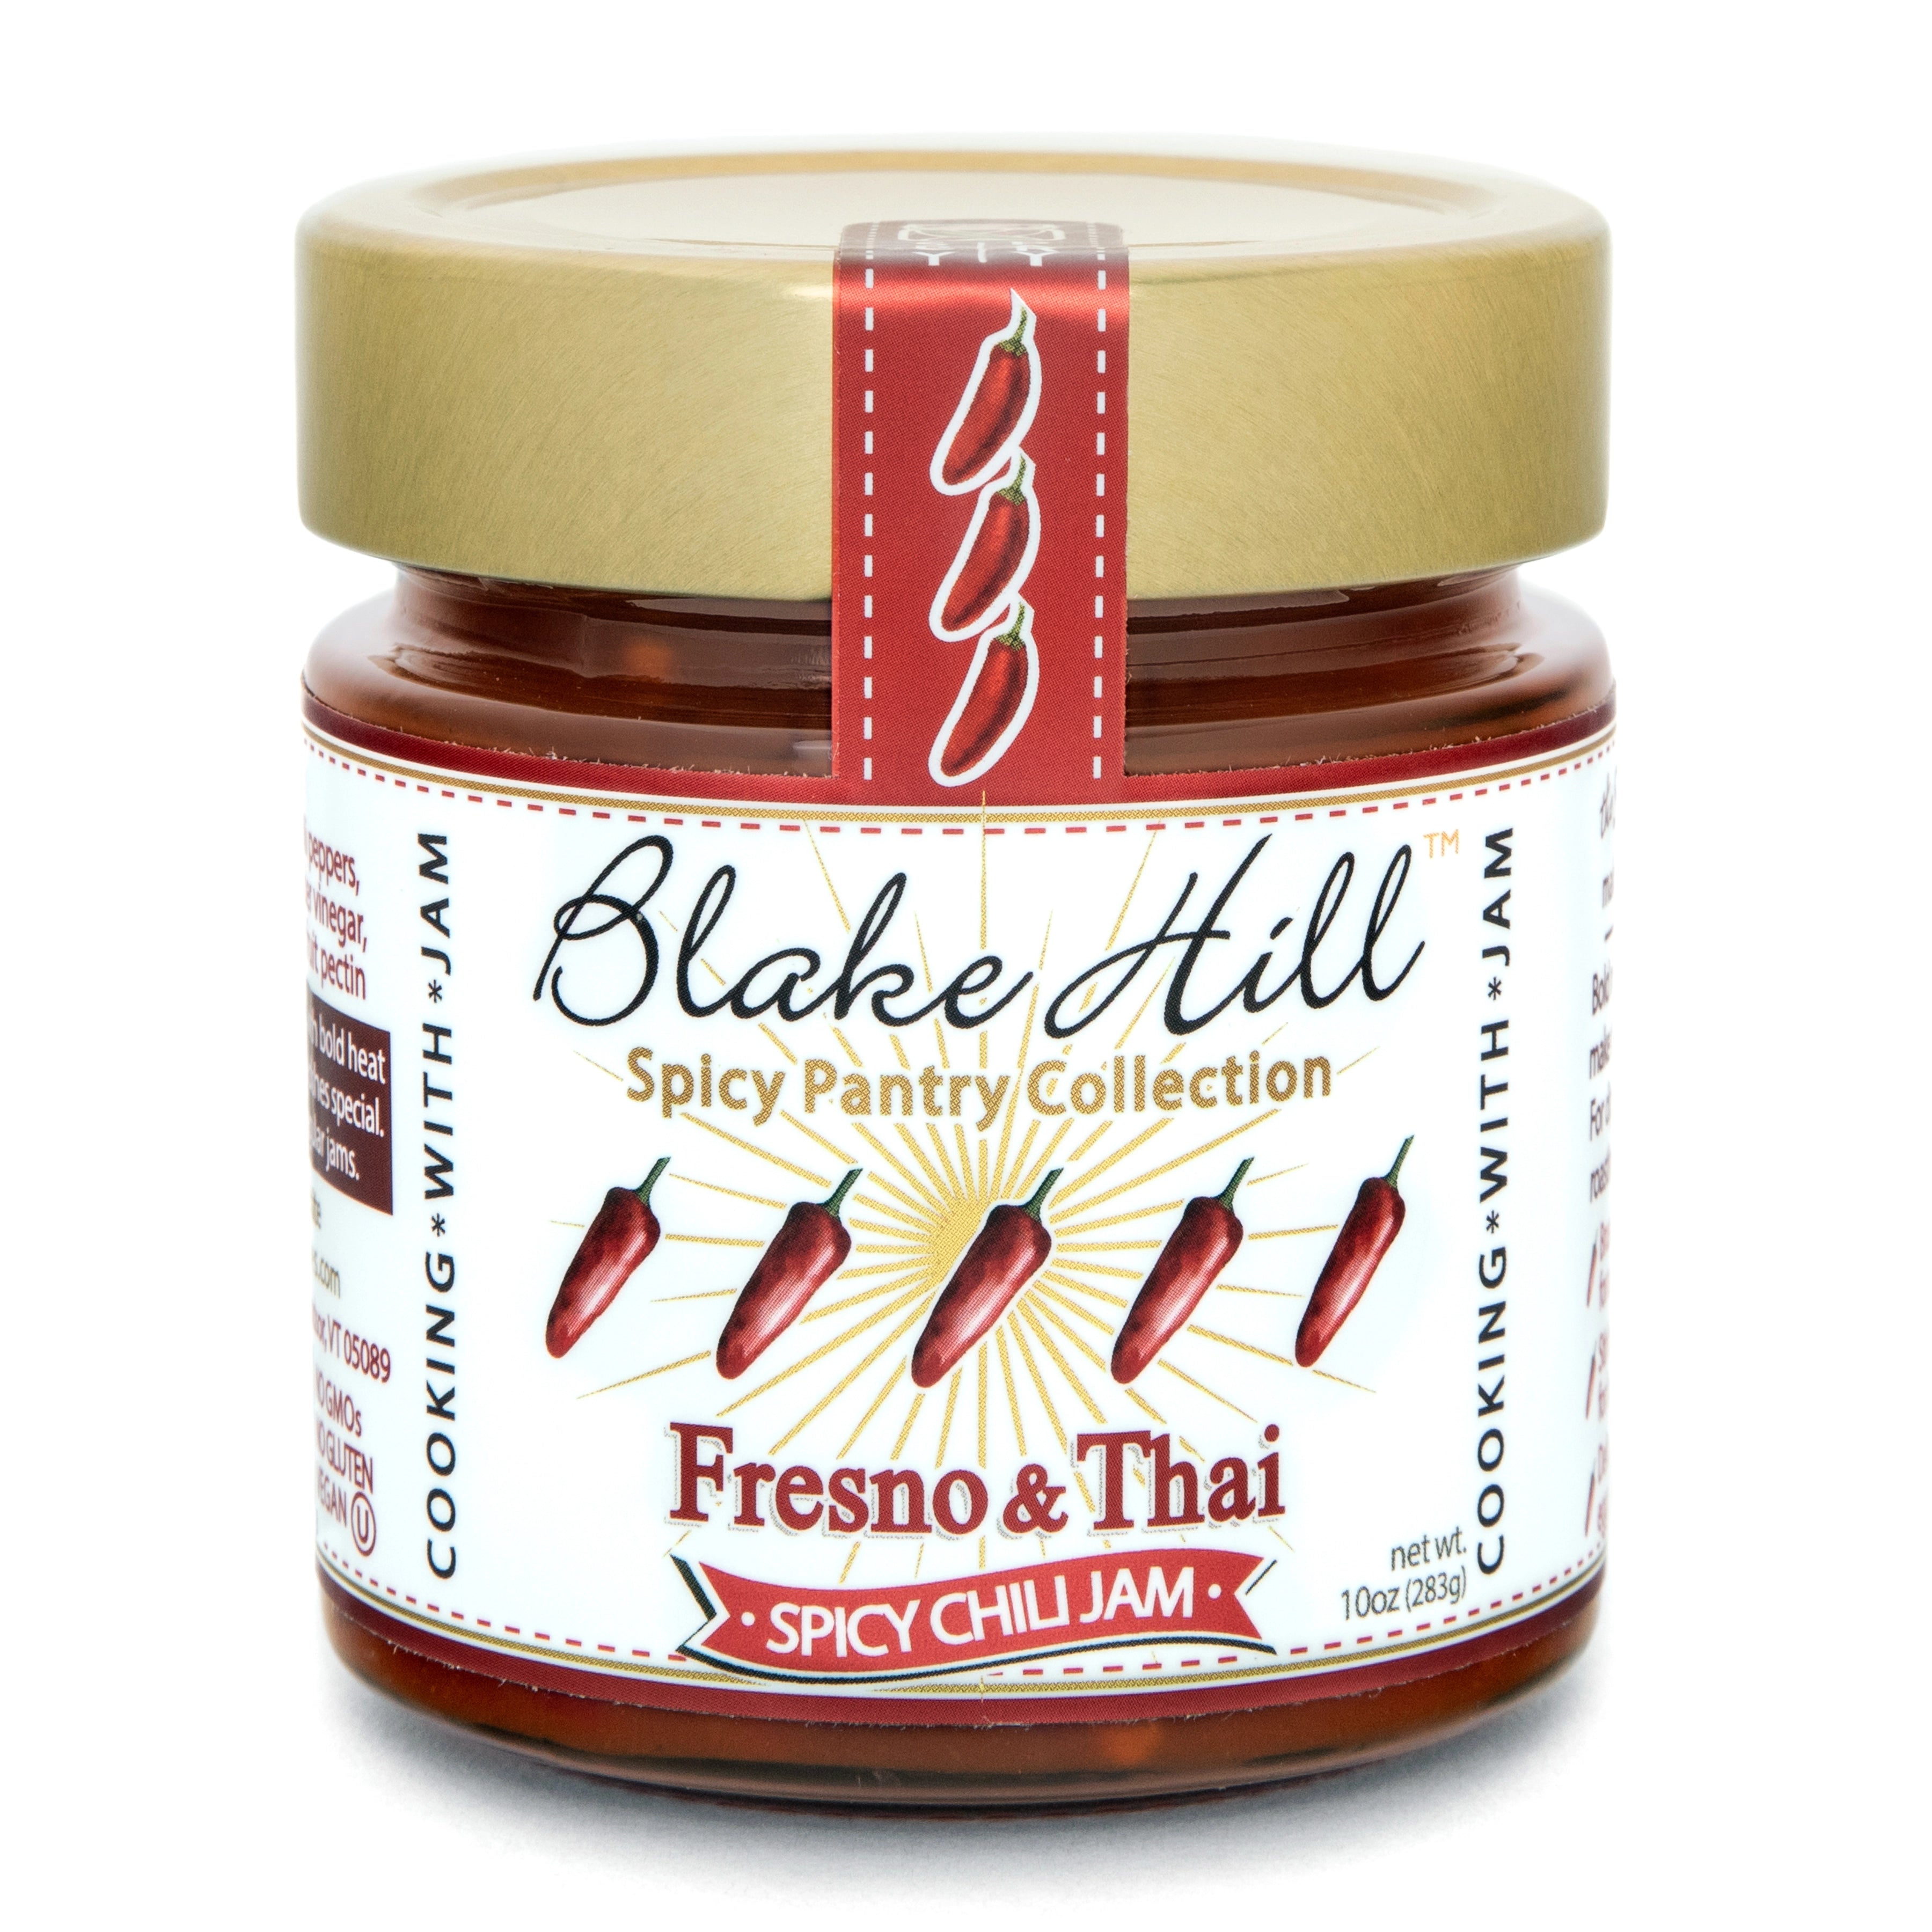 Blake Hill Preserves Fresno & Thai Spicy Chili jam in a glass jar.